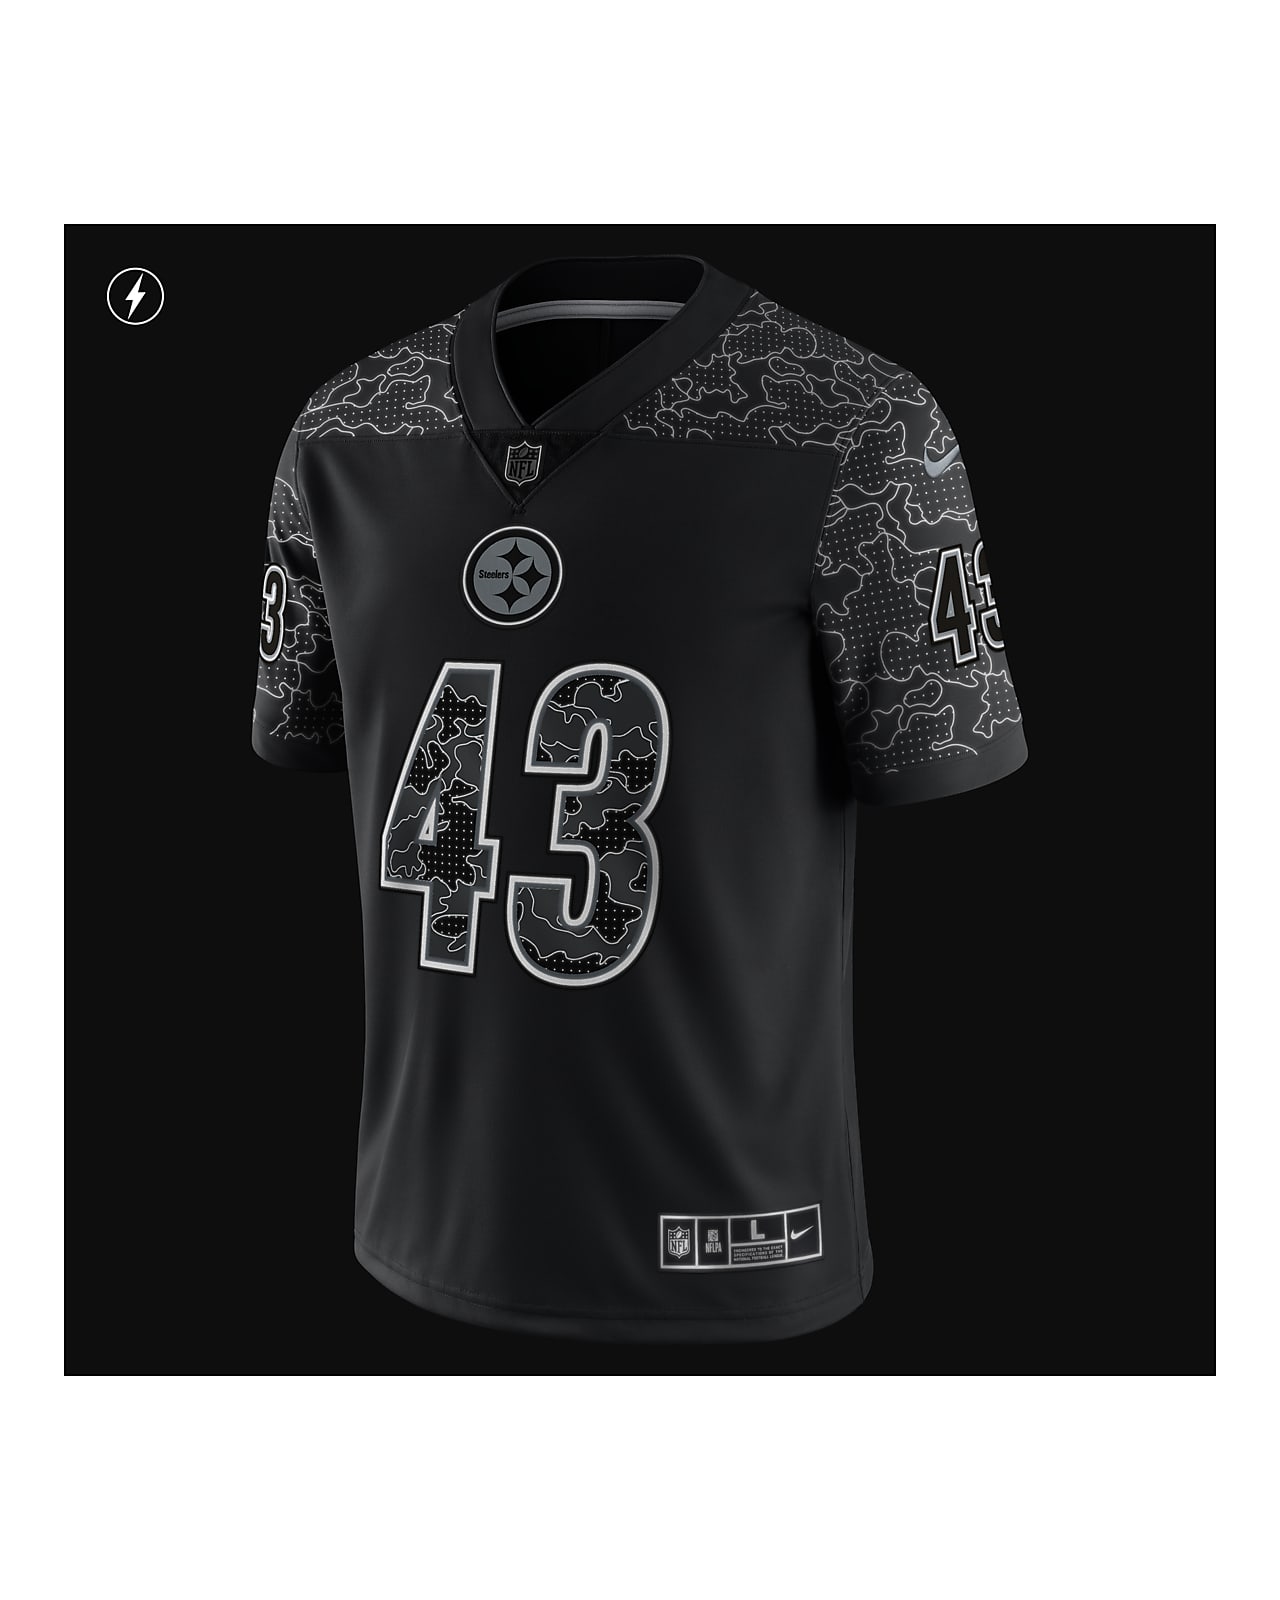 NFL Pittsburgh Steelers RFLCTV (Troy Polamalu) Men's Fashion Football Jersey.  Nike.com